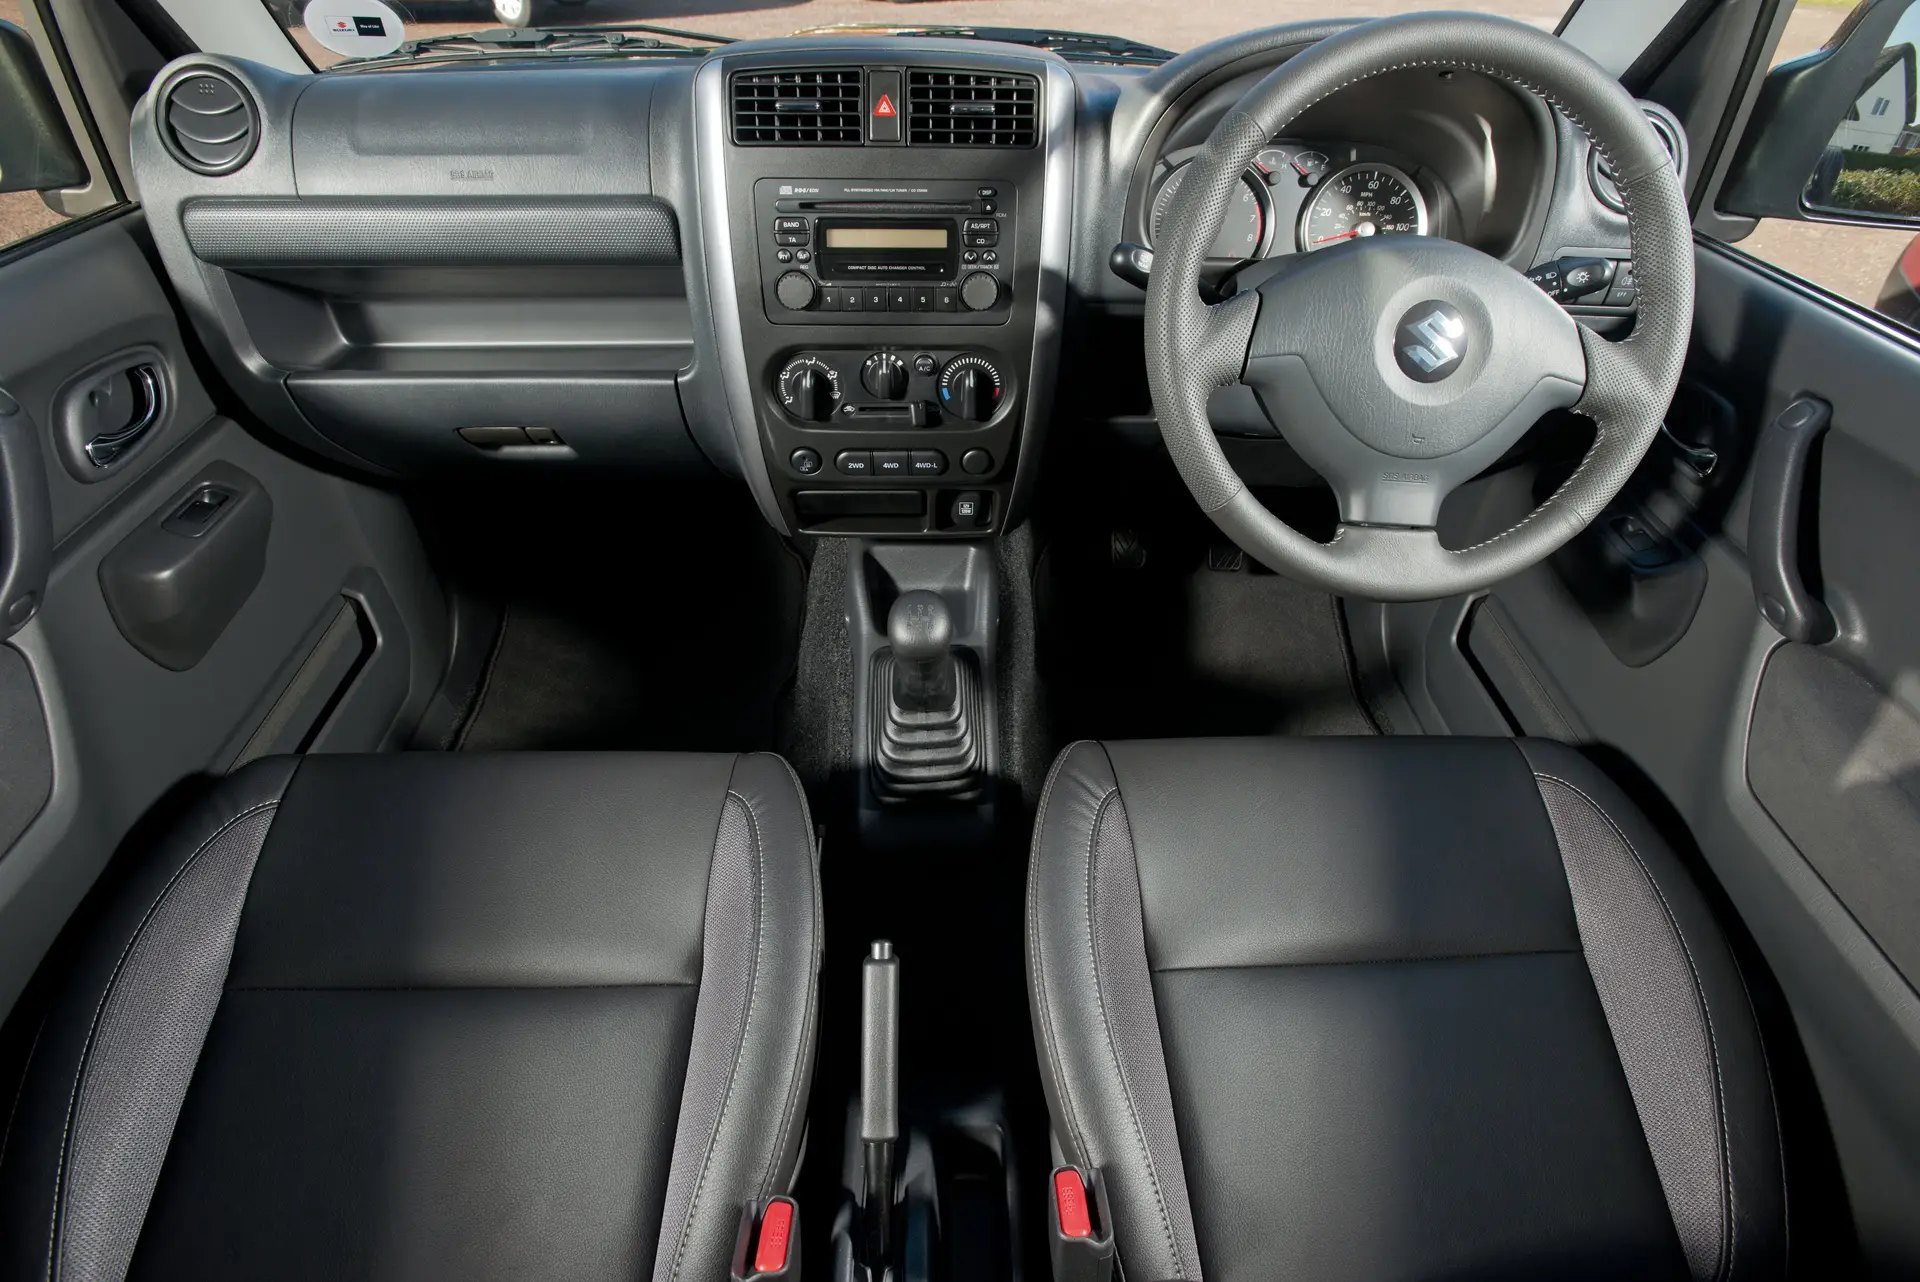 Suzuki Jimny Front Interior